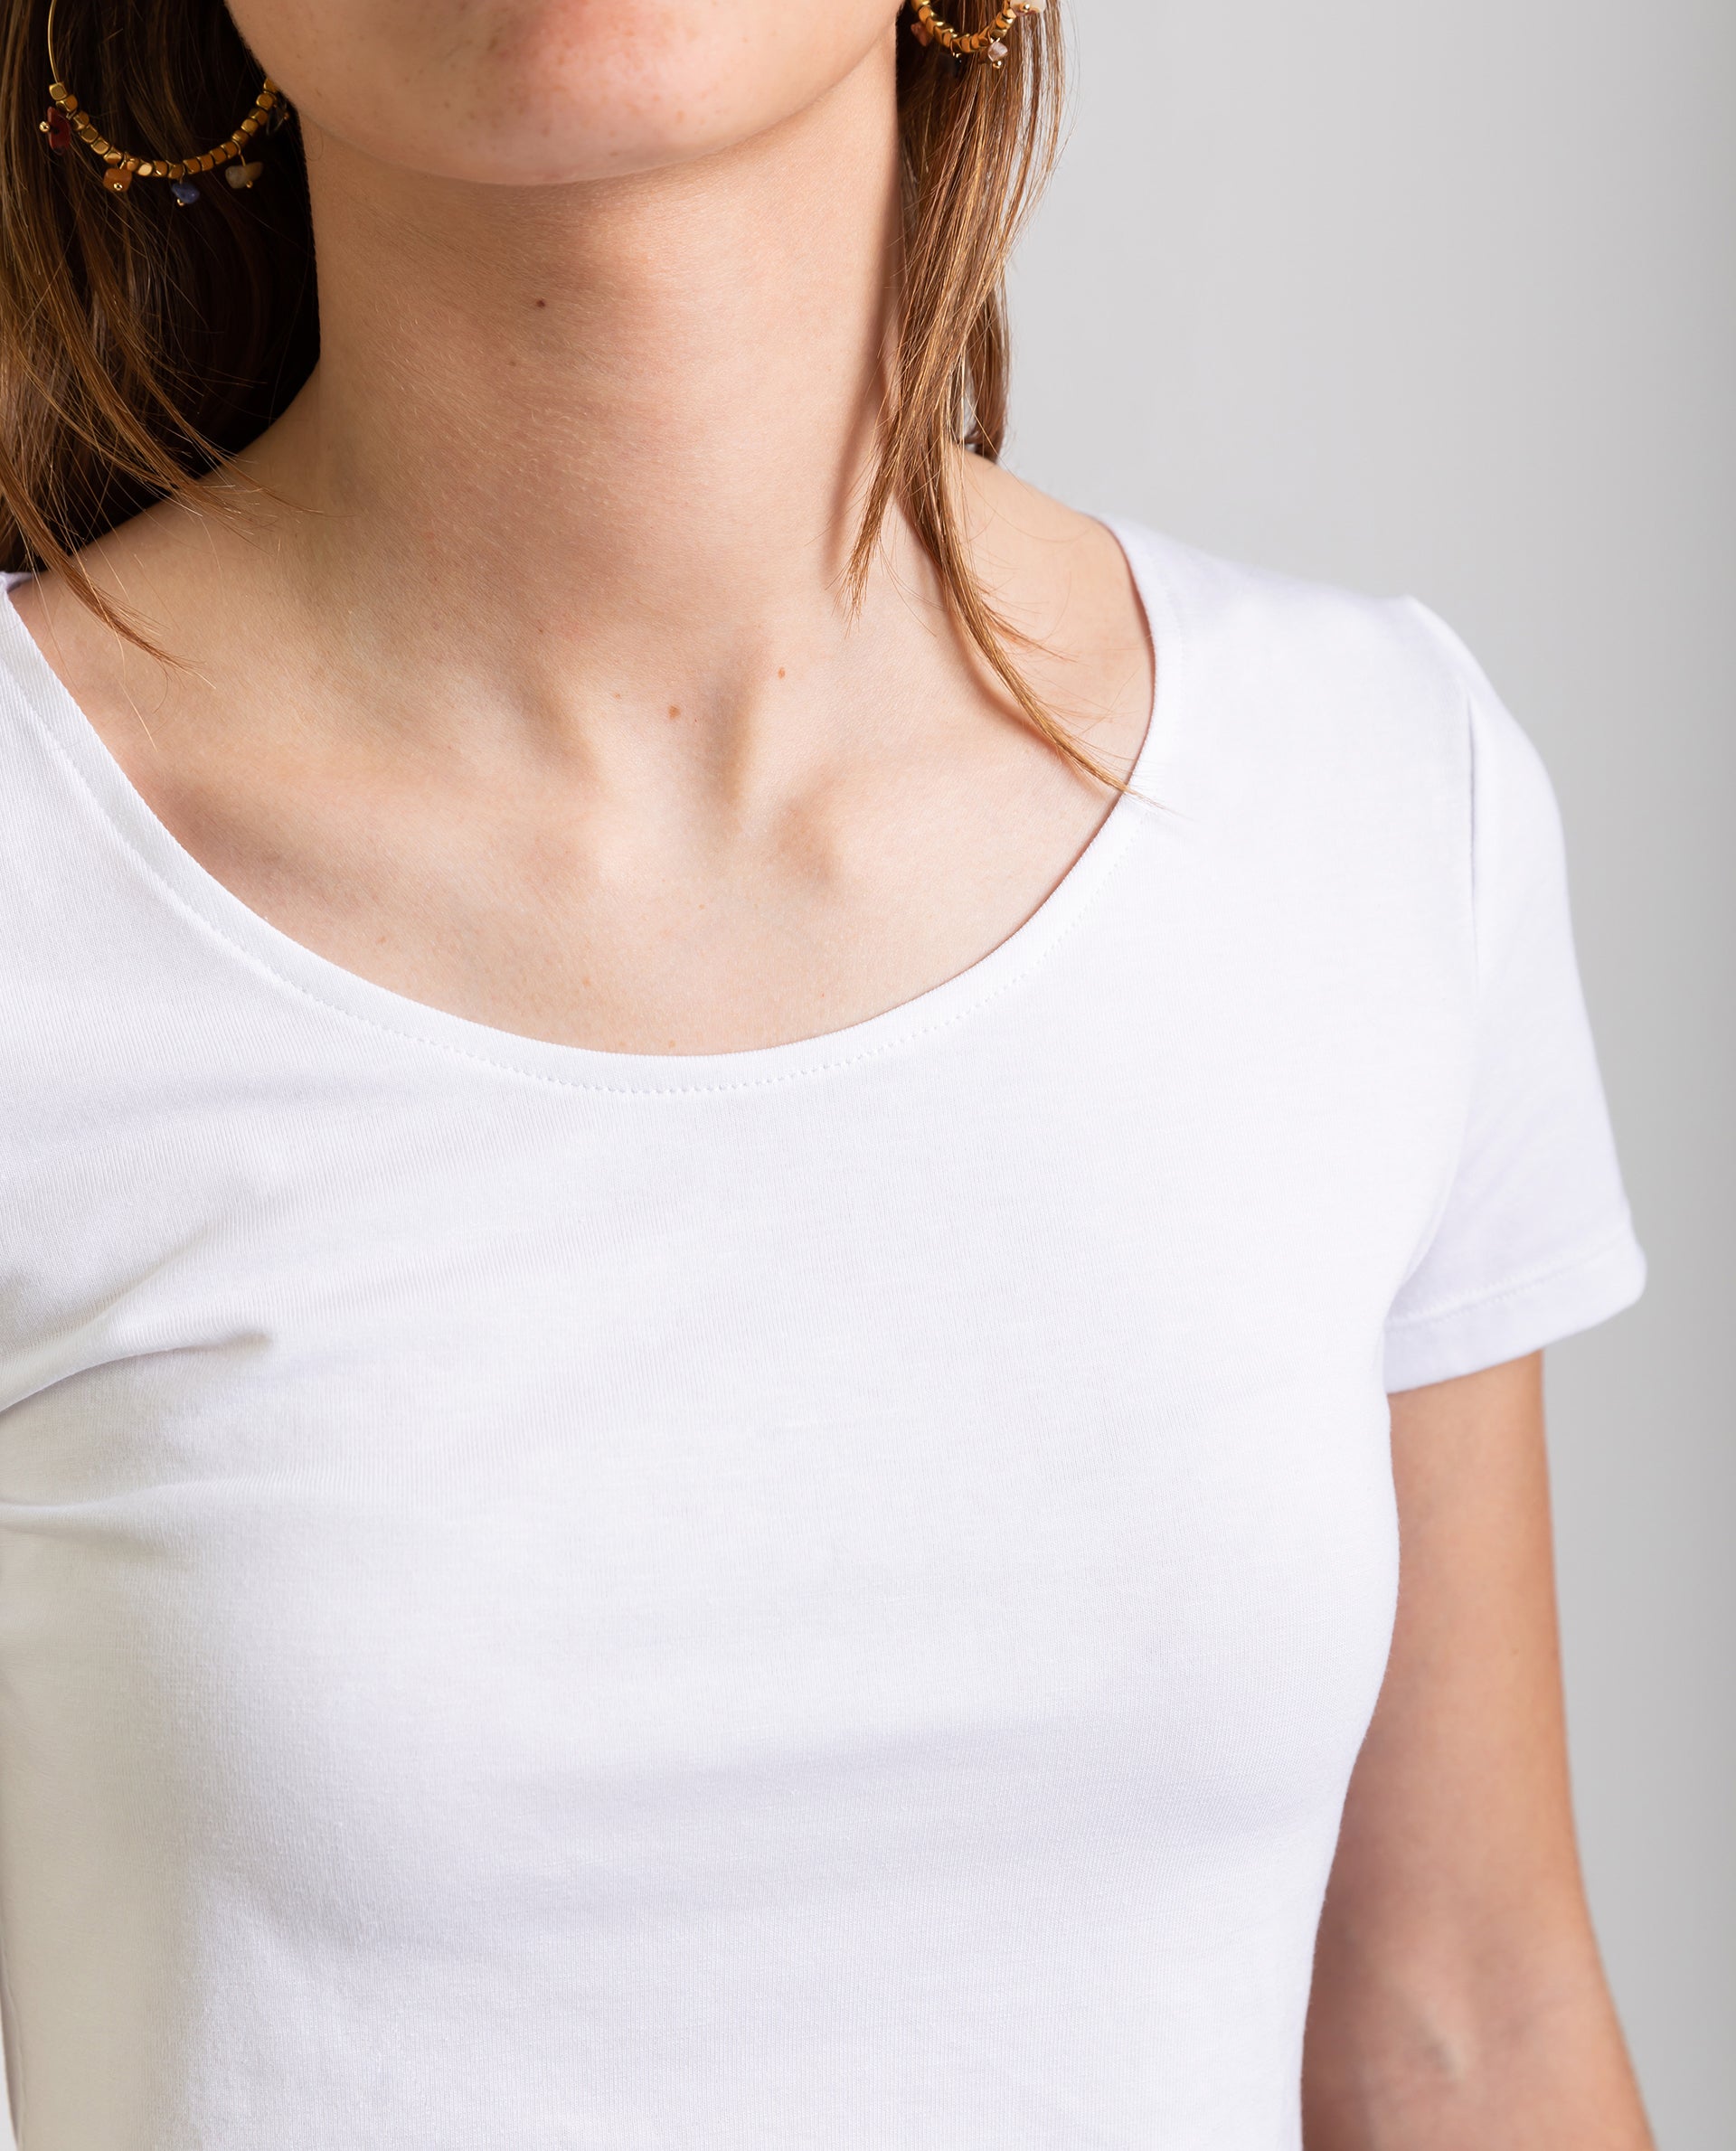 CAMISETA READY TO LIVE | Camiseta Crop Top Blanco de Mujer con Manga Corta | THE-ARE